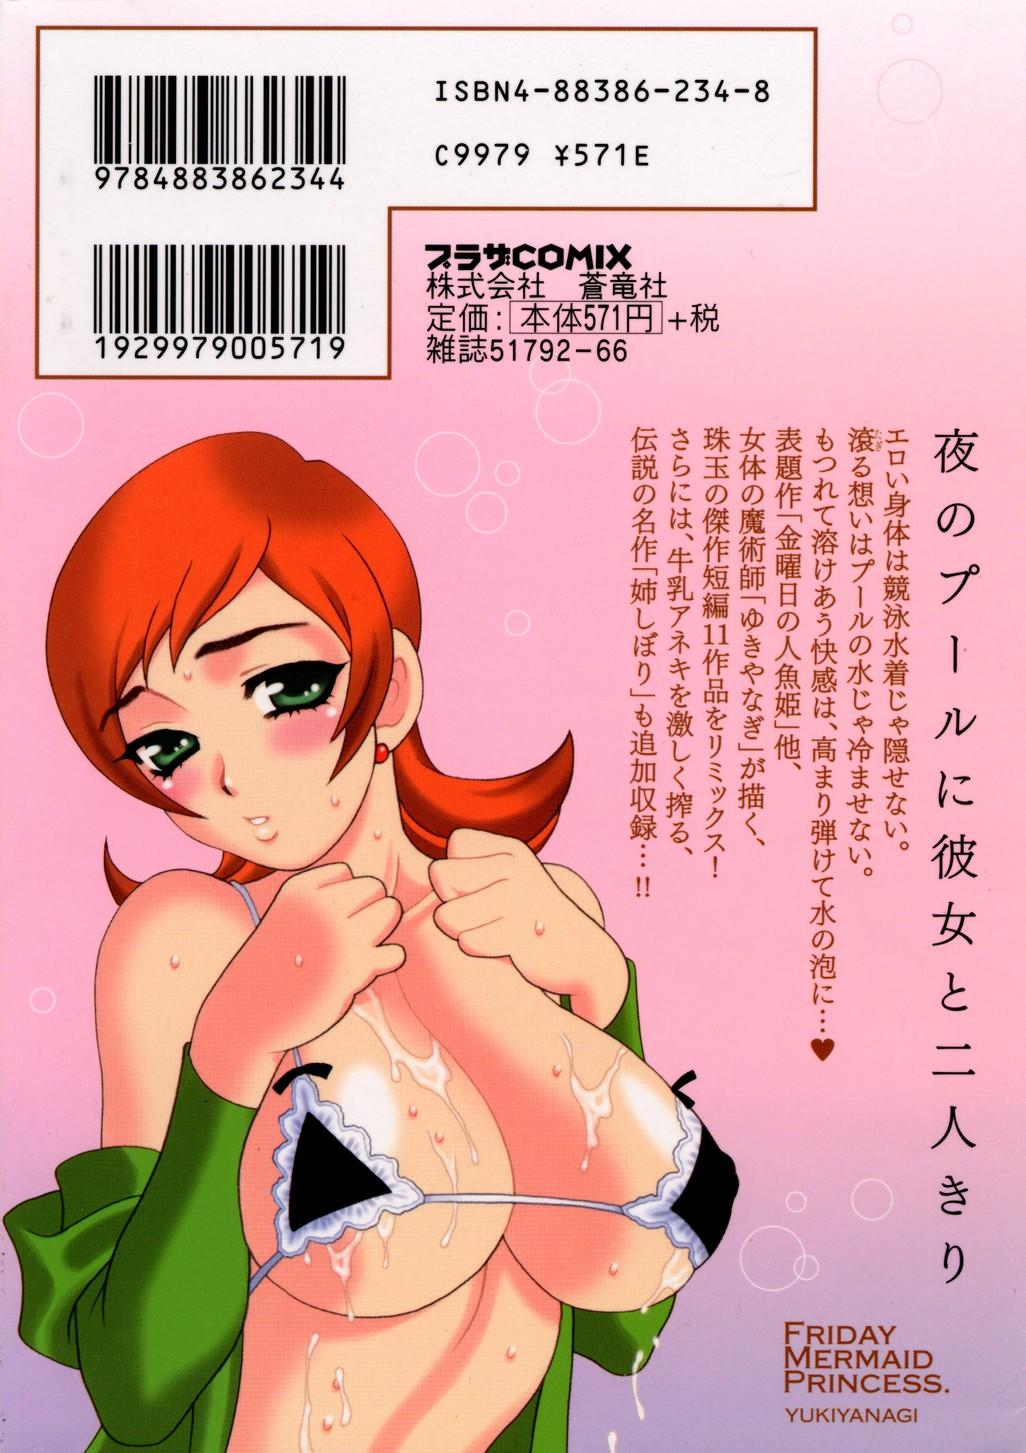 Kinyoubi no Ningyohime - Friday Mermaid Princess 1